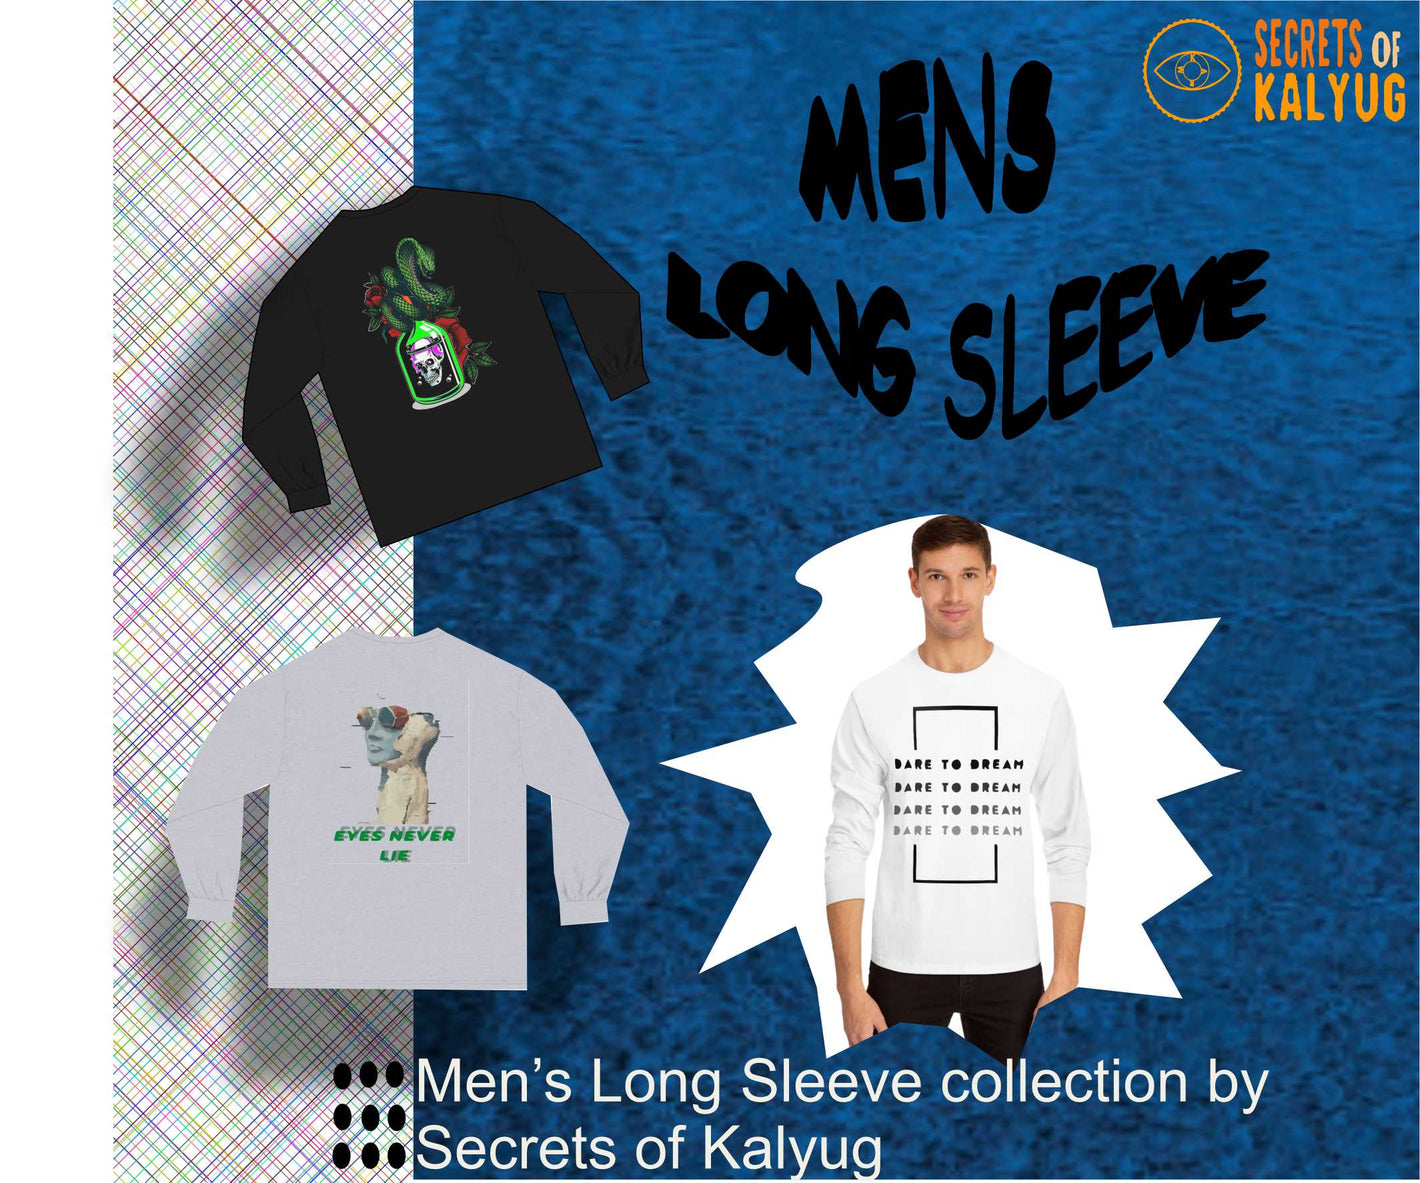 Men's Long sleeve collection by secrets of kalyug